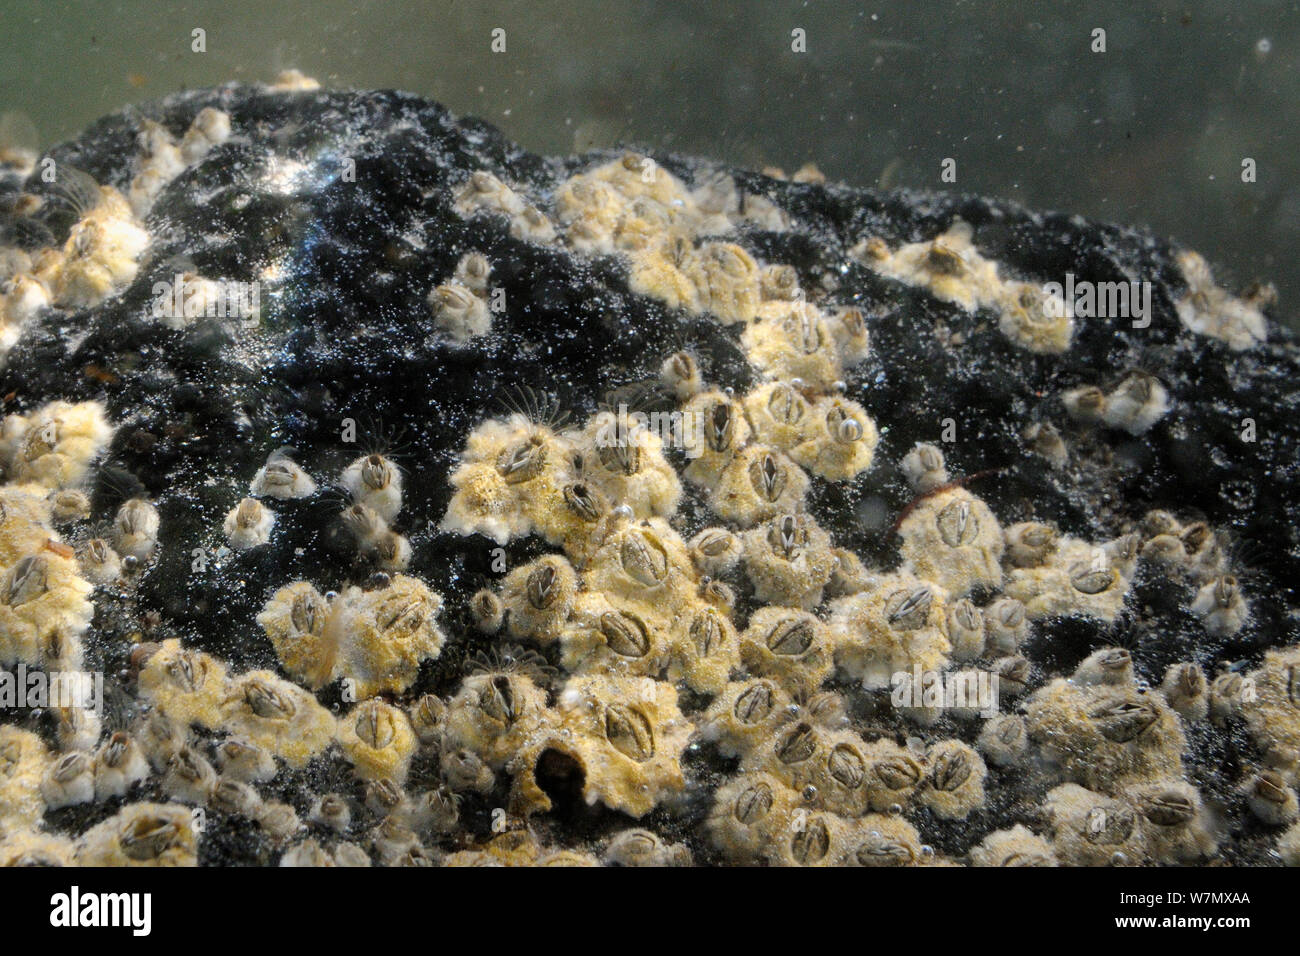 Common barnacles (Balanus balanoides) attached to a rock filter feeding hard, Crail, Fife, UK, July Stock Photo